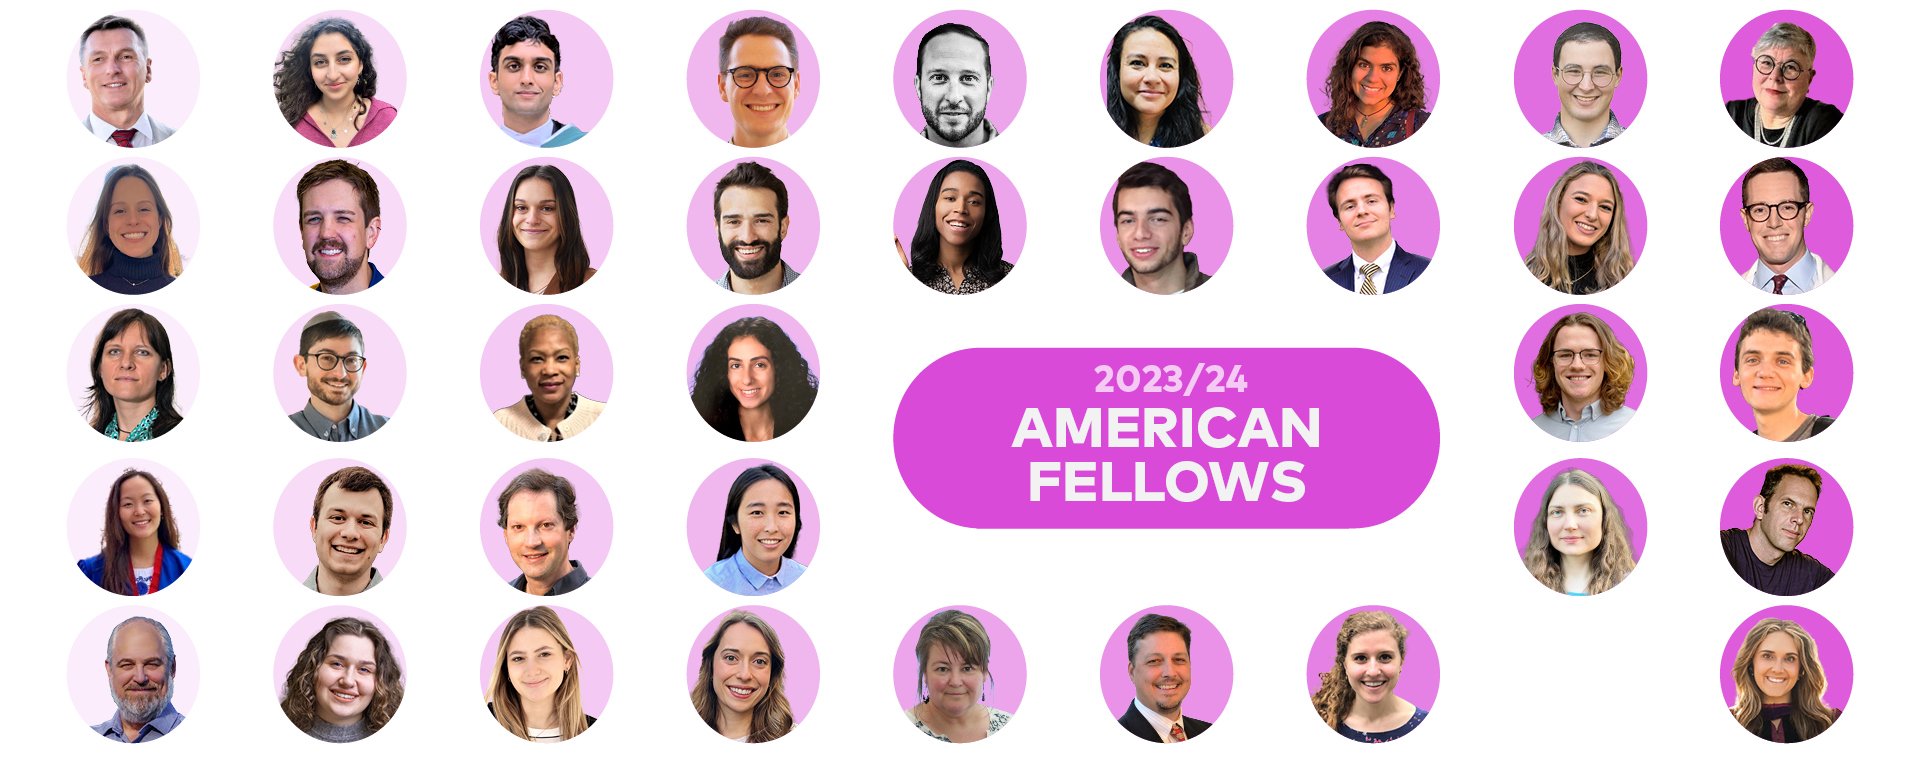 American fellows 2023-24 